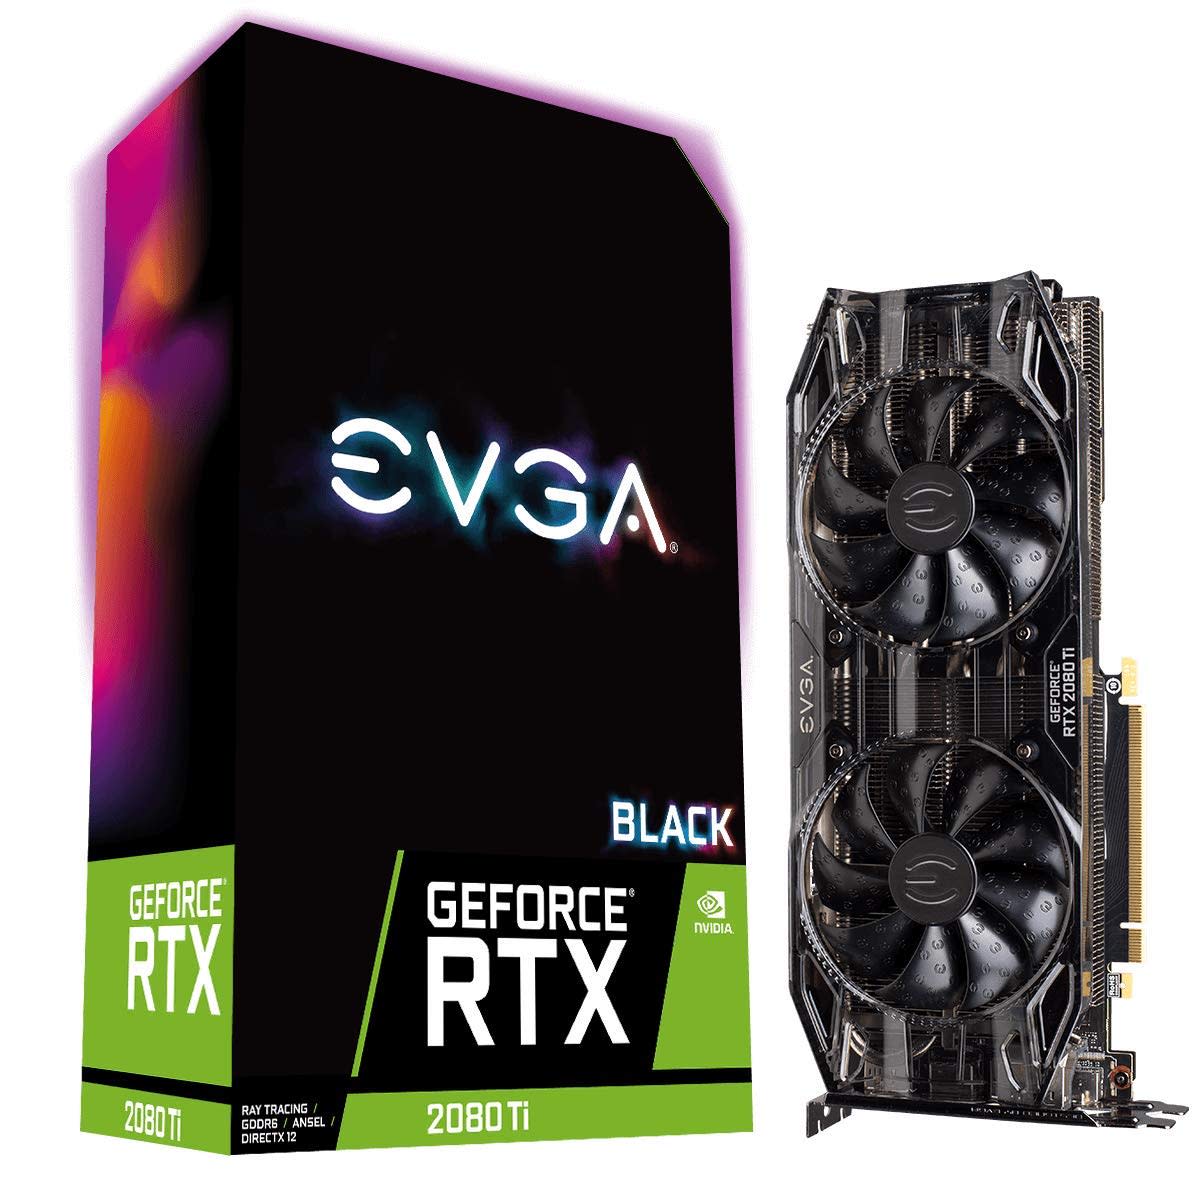 Evga Nvidia Rtx 2080 Ti Black Edition Gaming Graphics Card Review